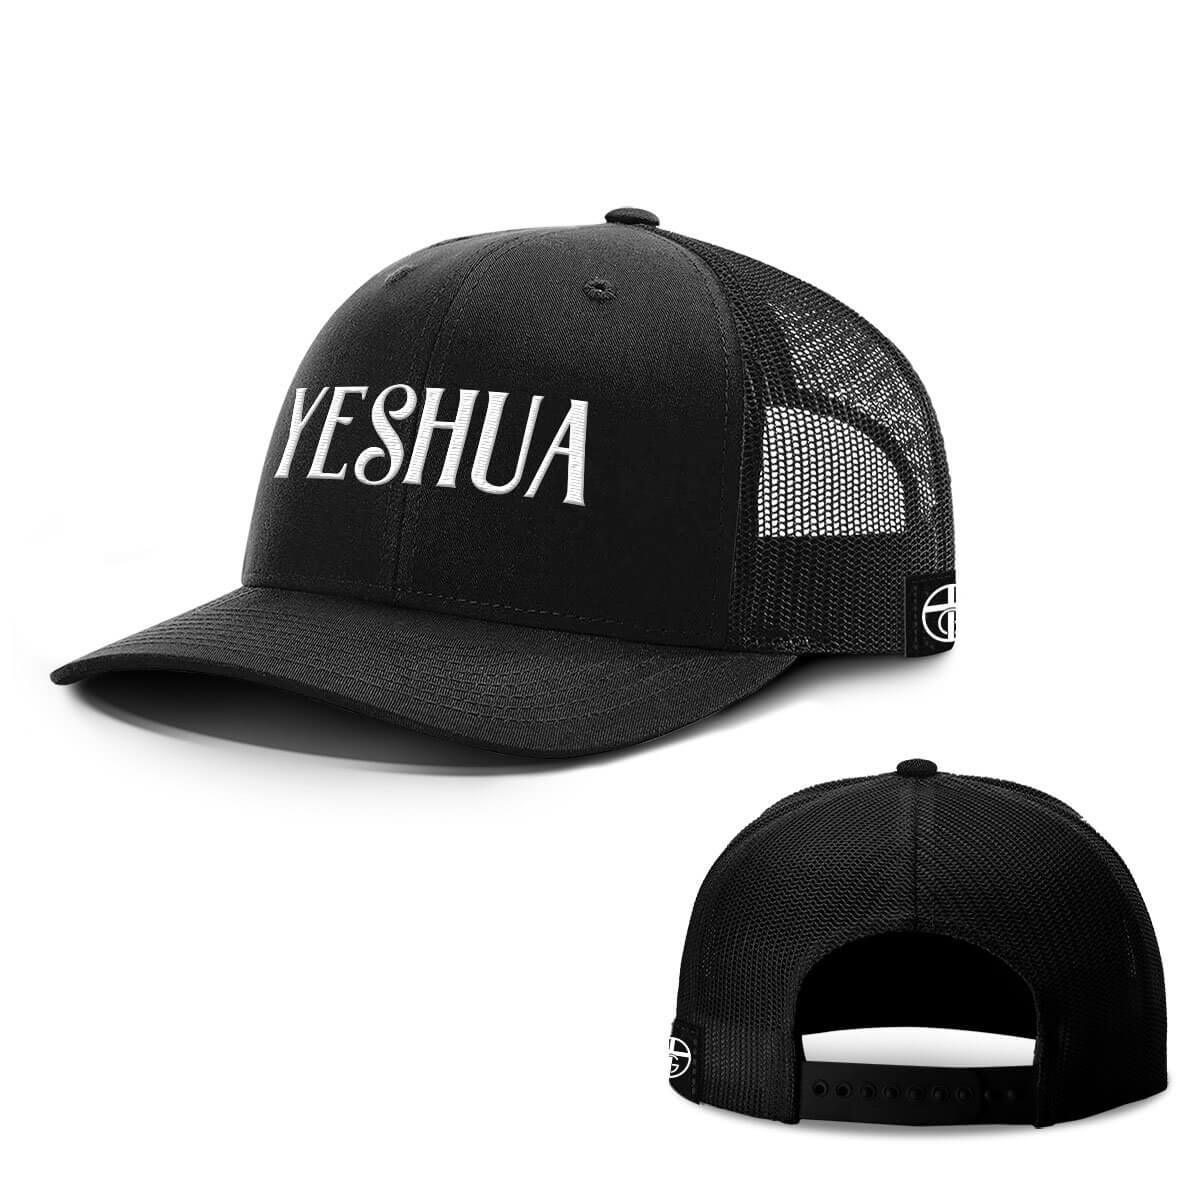 Yeshua V2 Hats - Our True God